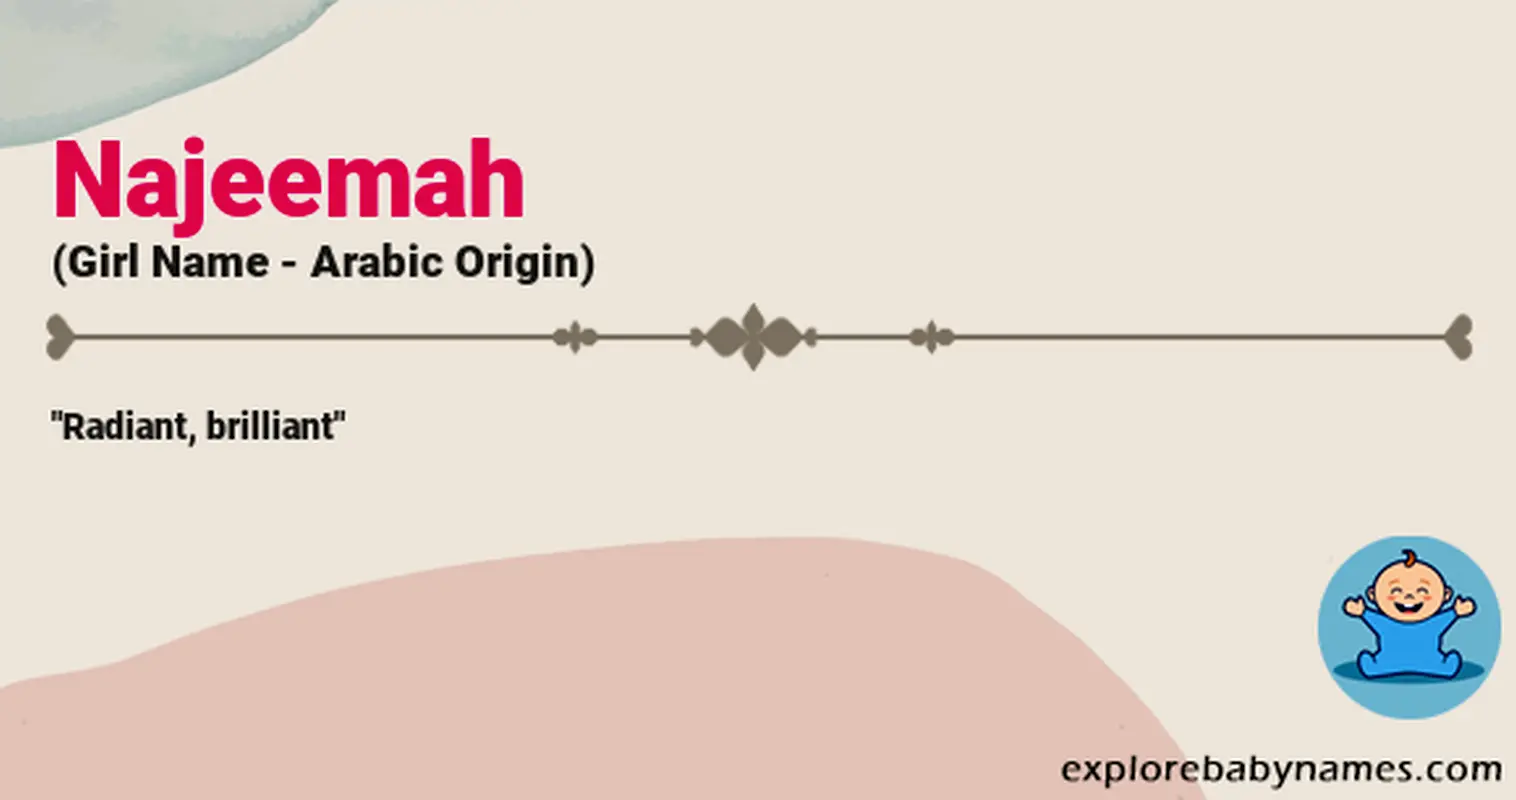 Meaning of Najeemah